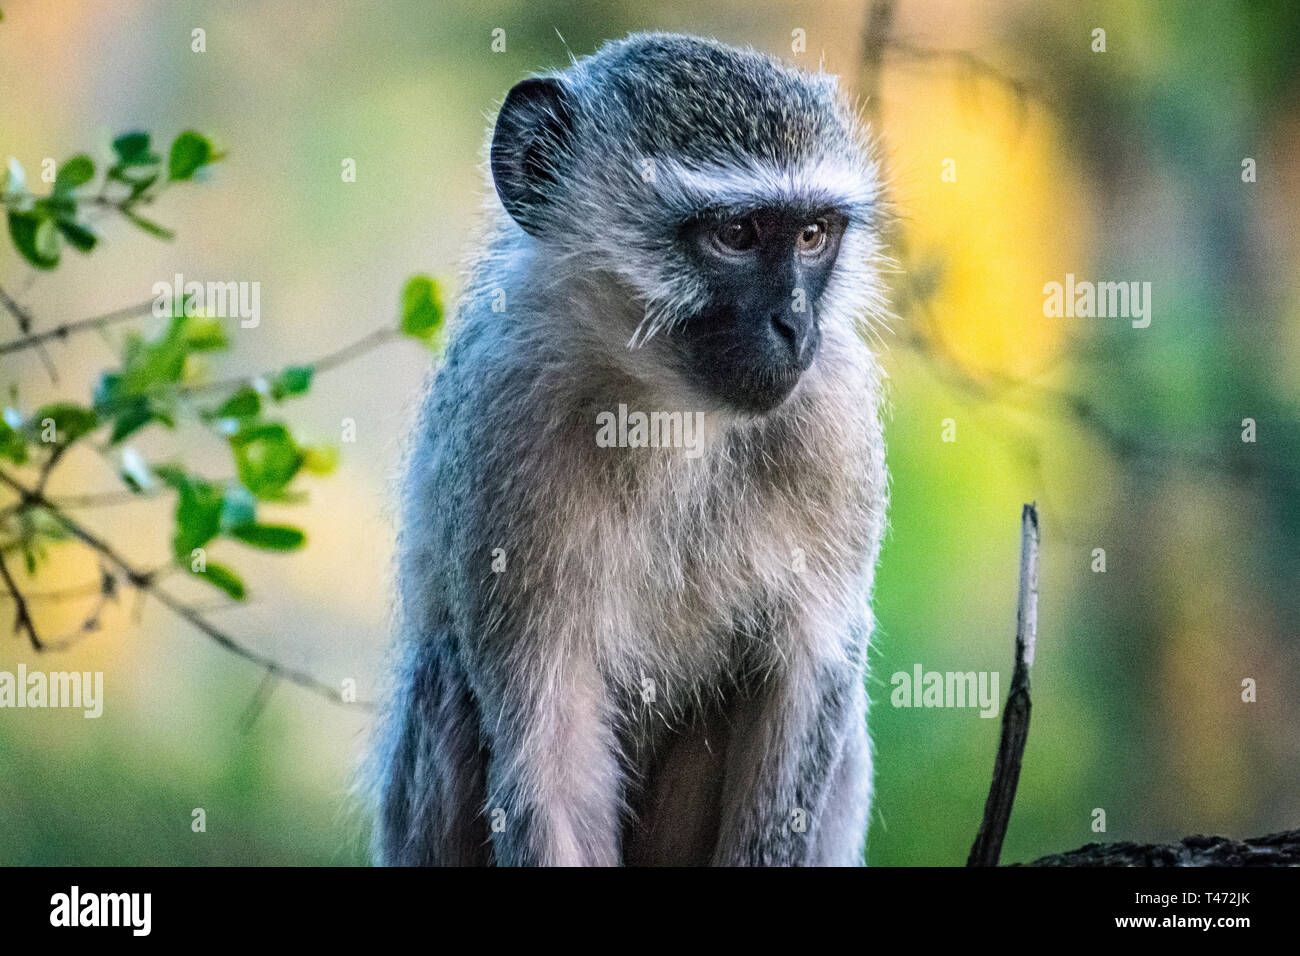 Scimmia Vervet seduta Foto Stock